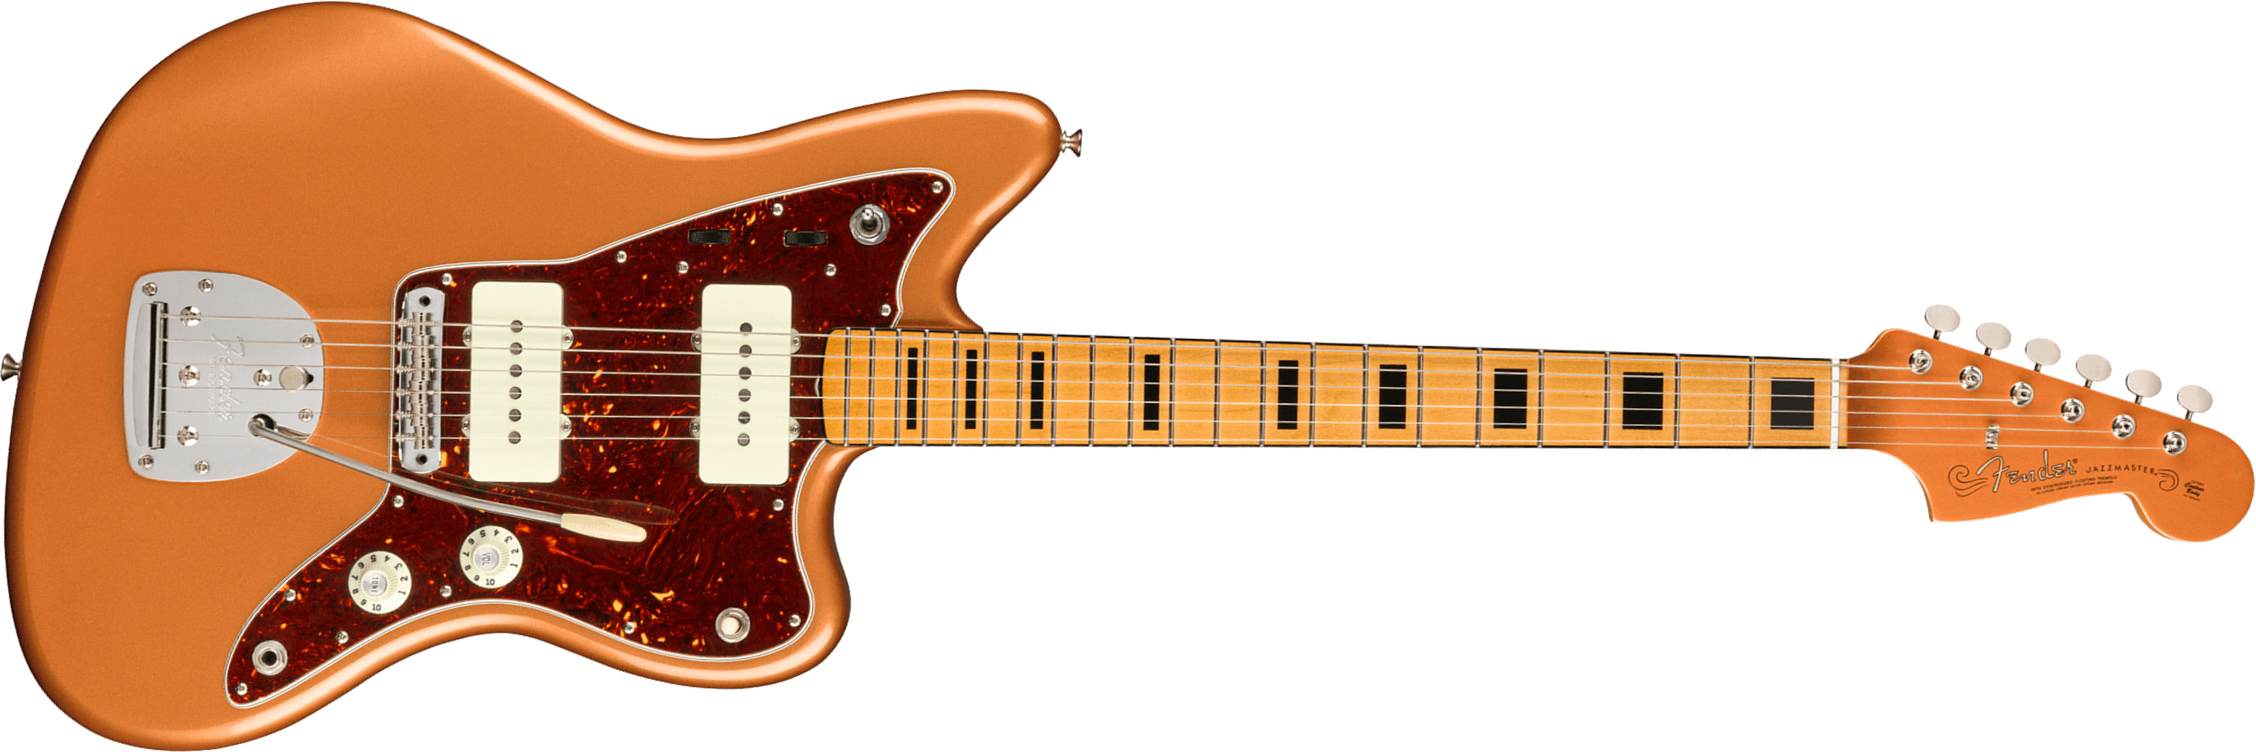 Fender Troy Van Leeuwen Jazzmaster Signature Mex Mn - Copper Age - Guitarra electrica retro rock - Main picture